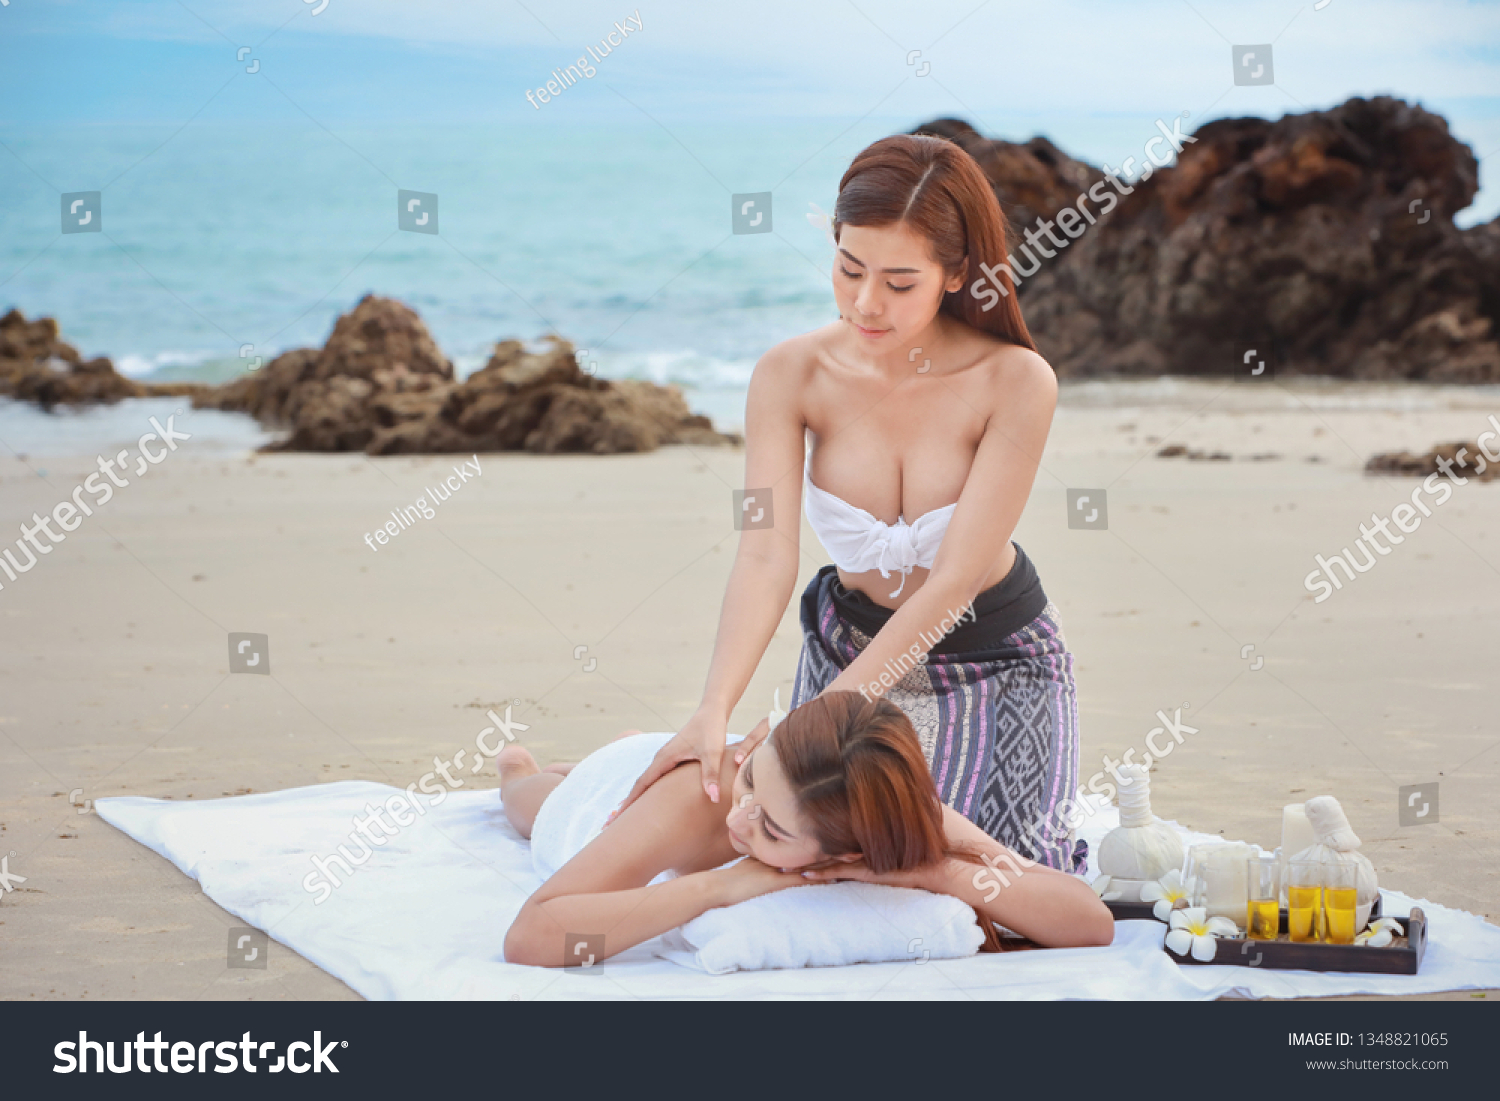 Erotic jung woman massage